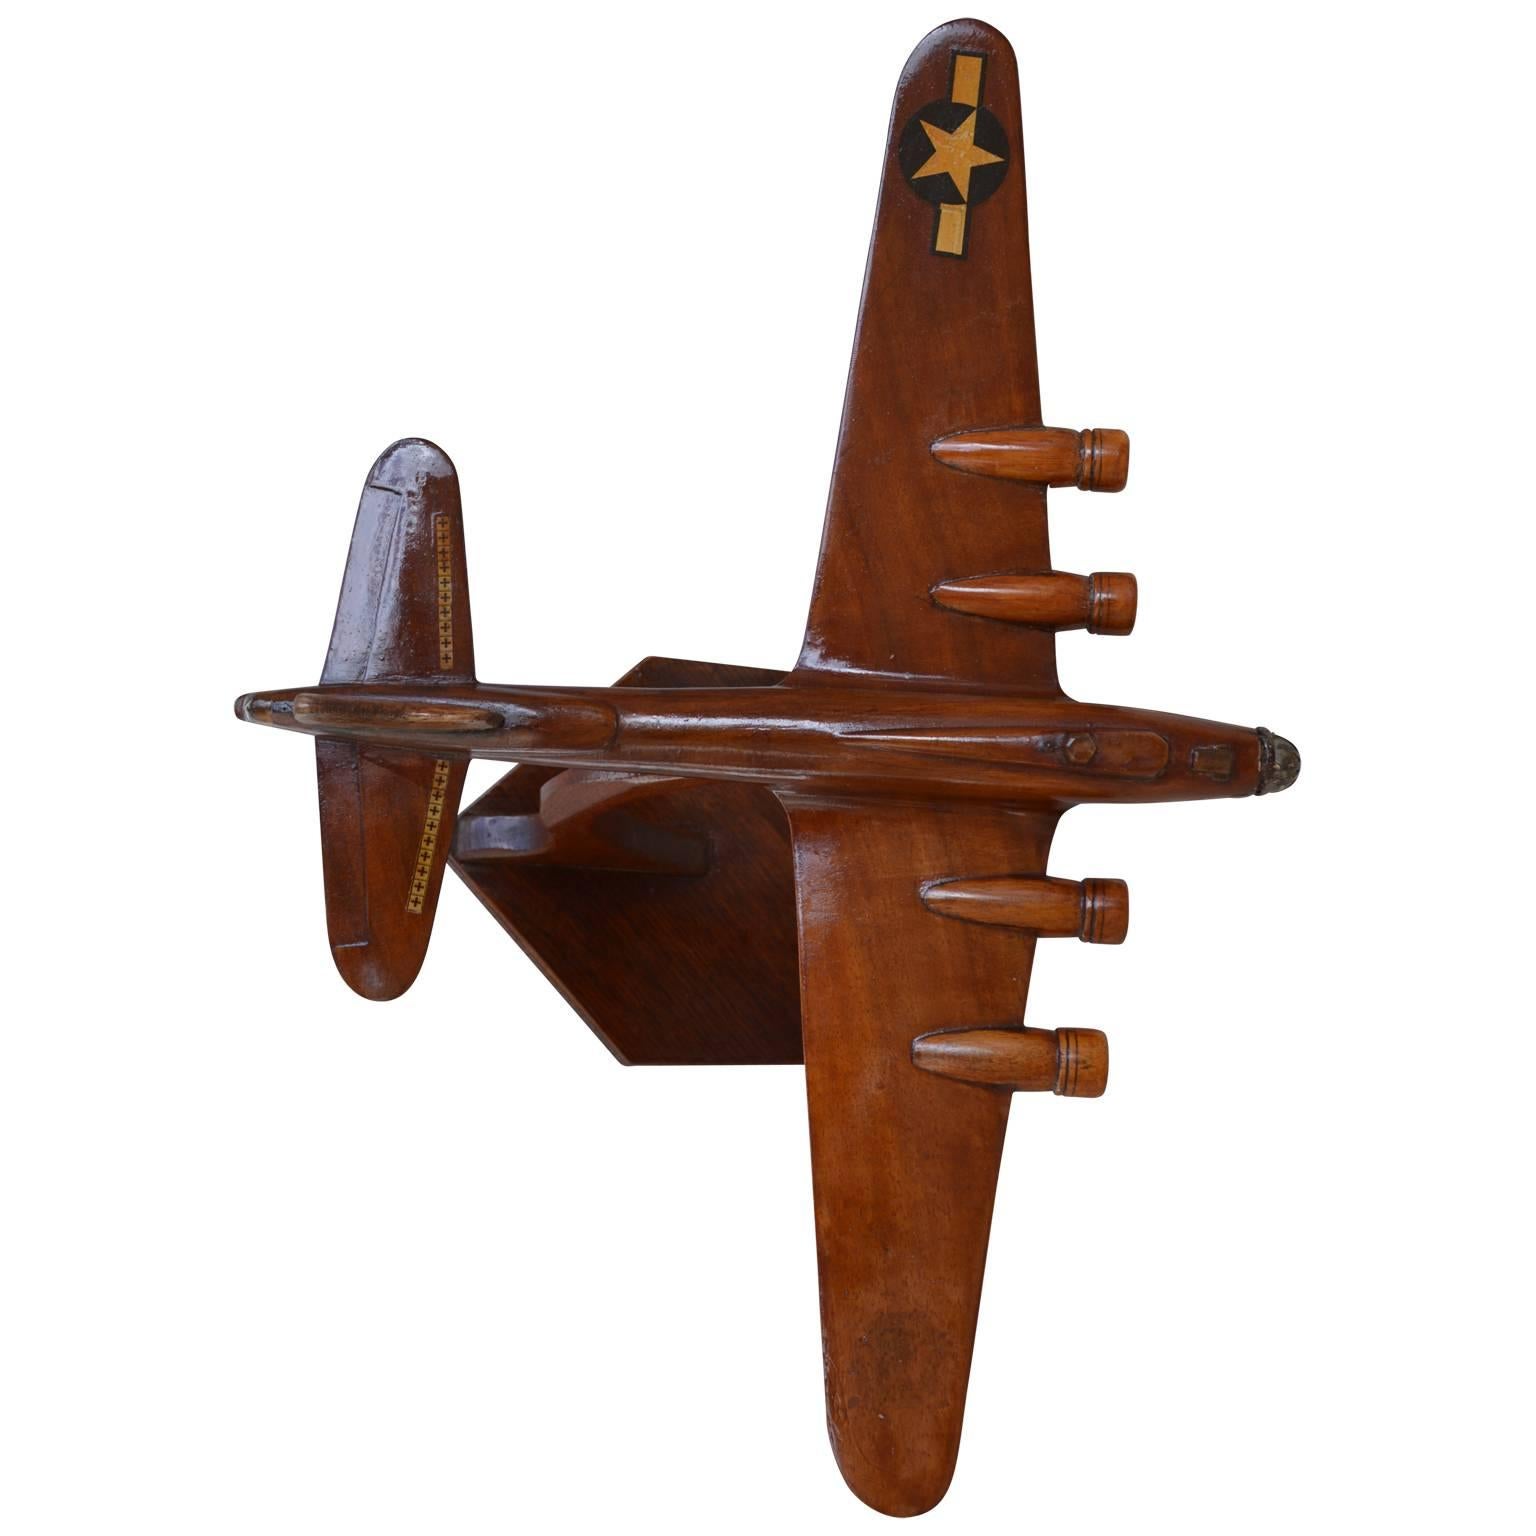 Vintage Desk Airplane Model of B-17 Flying Fortress